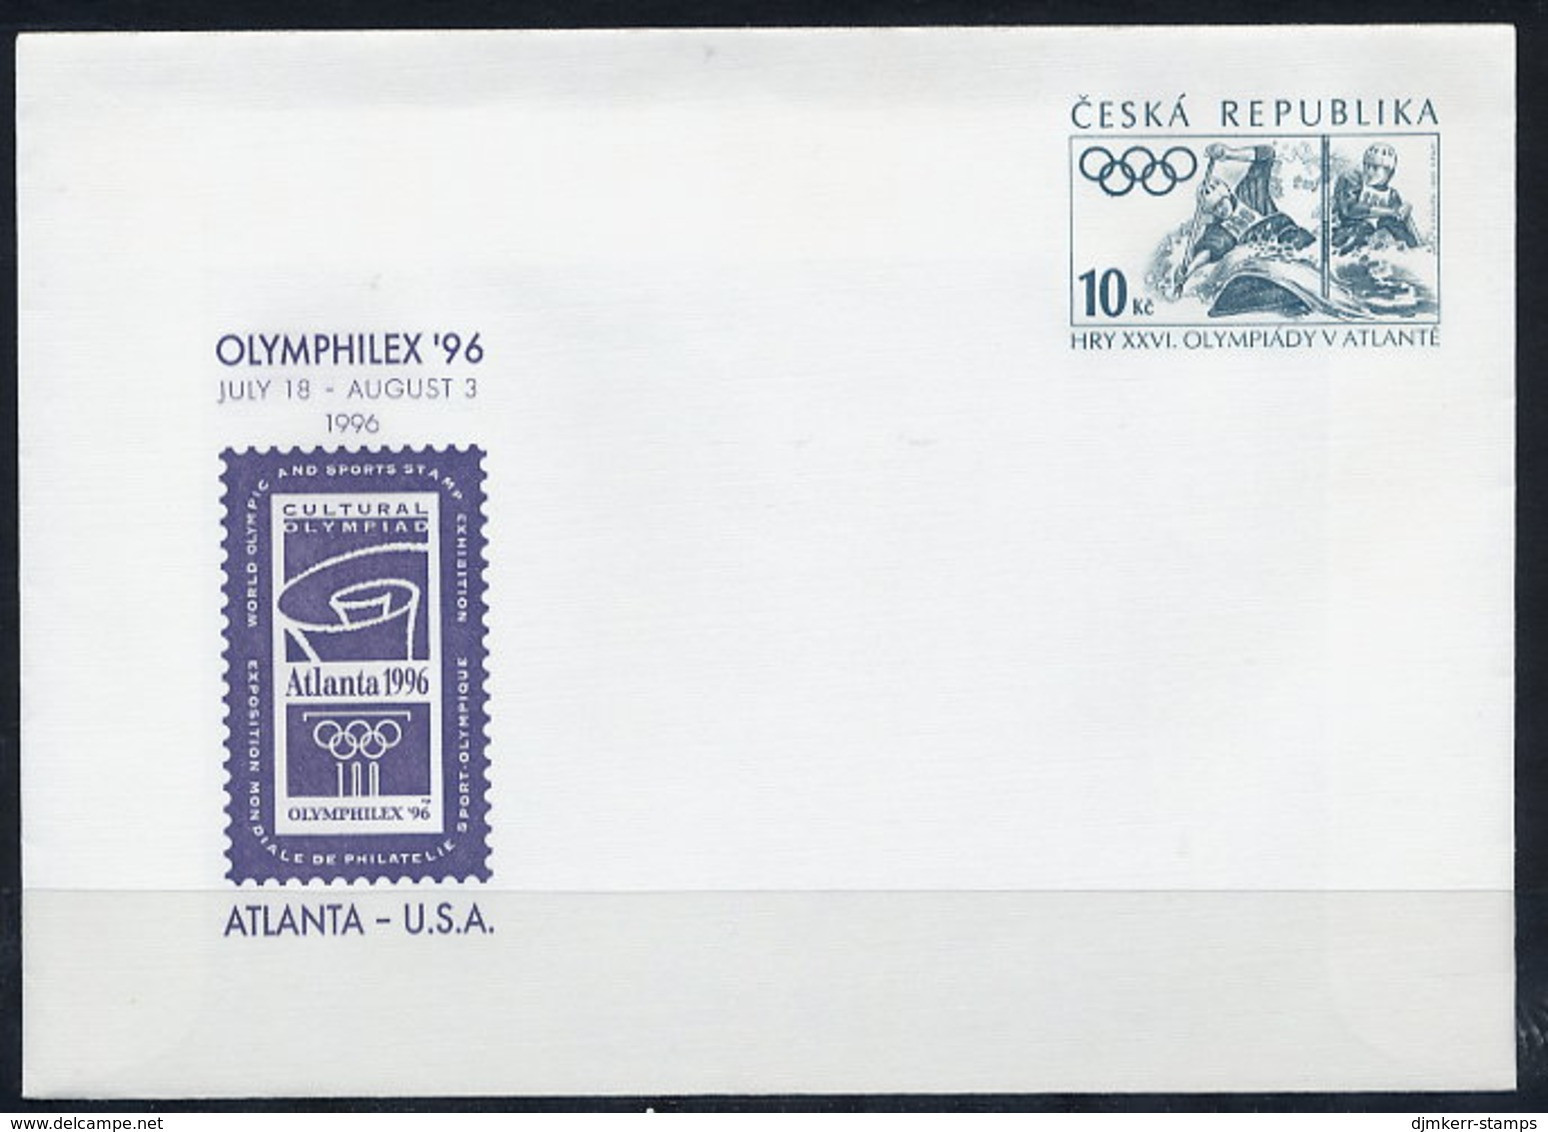 CZECH REPUBLIC 1996 10 Kc Envelope OLYMPHILEX '96 Unused.  Michel U3 - Covers